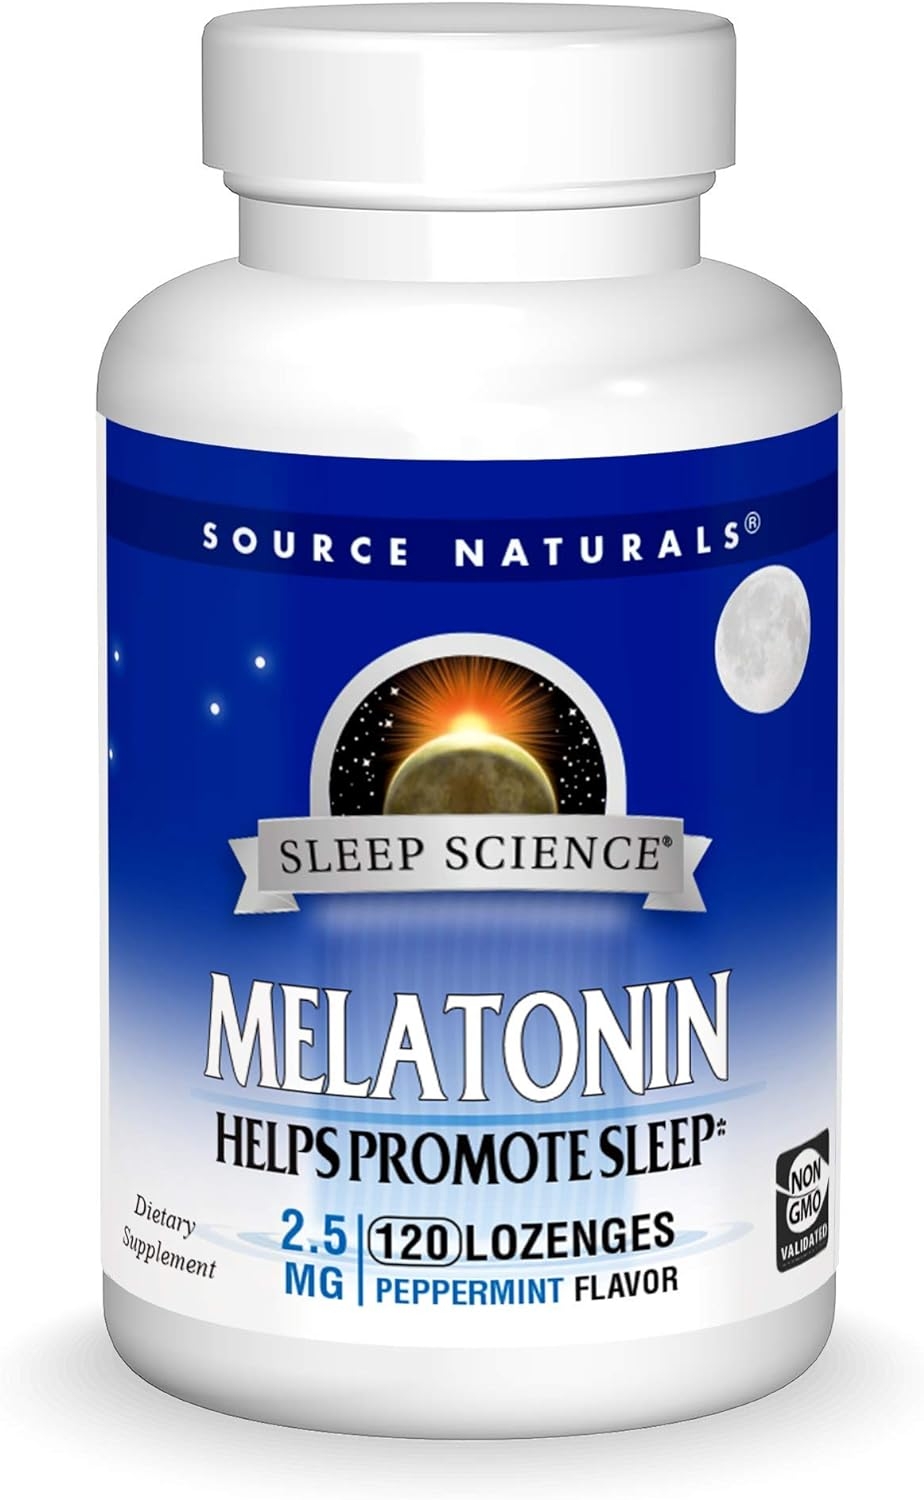 Source Naturals Sleep Science Melatonin 2.5 mg Peppermint Flavor - Helps Promote Sleep - 120 Lozenge Tablets